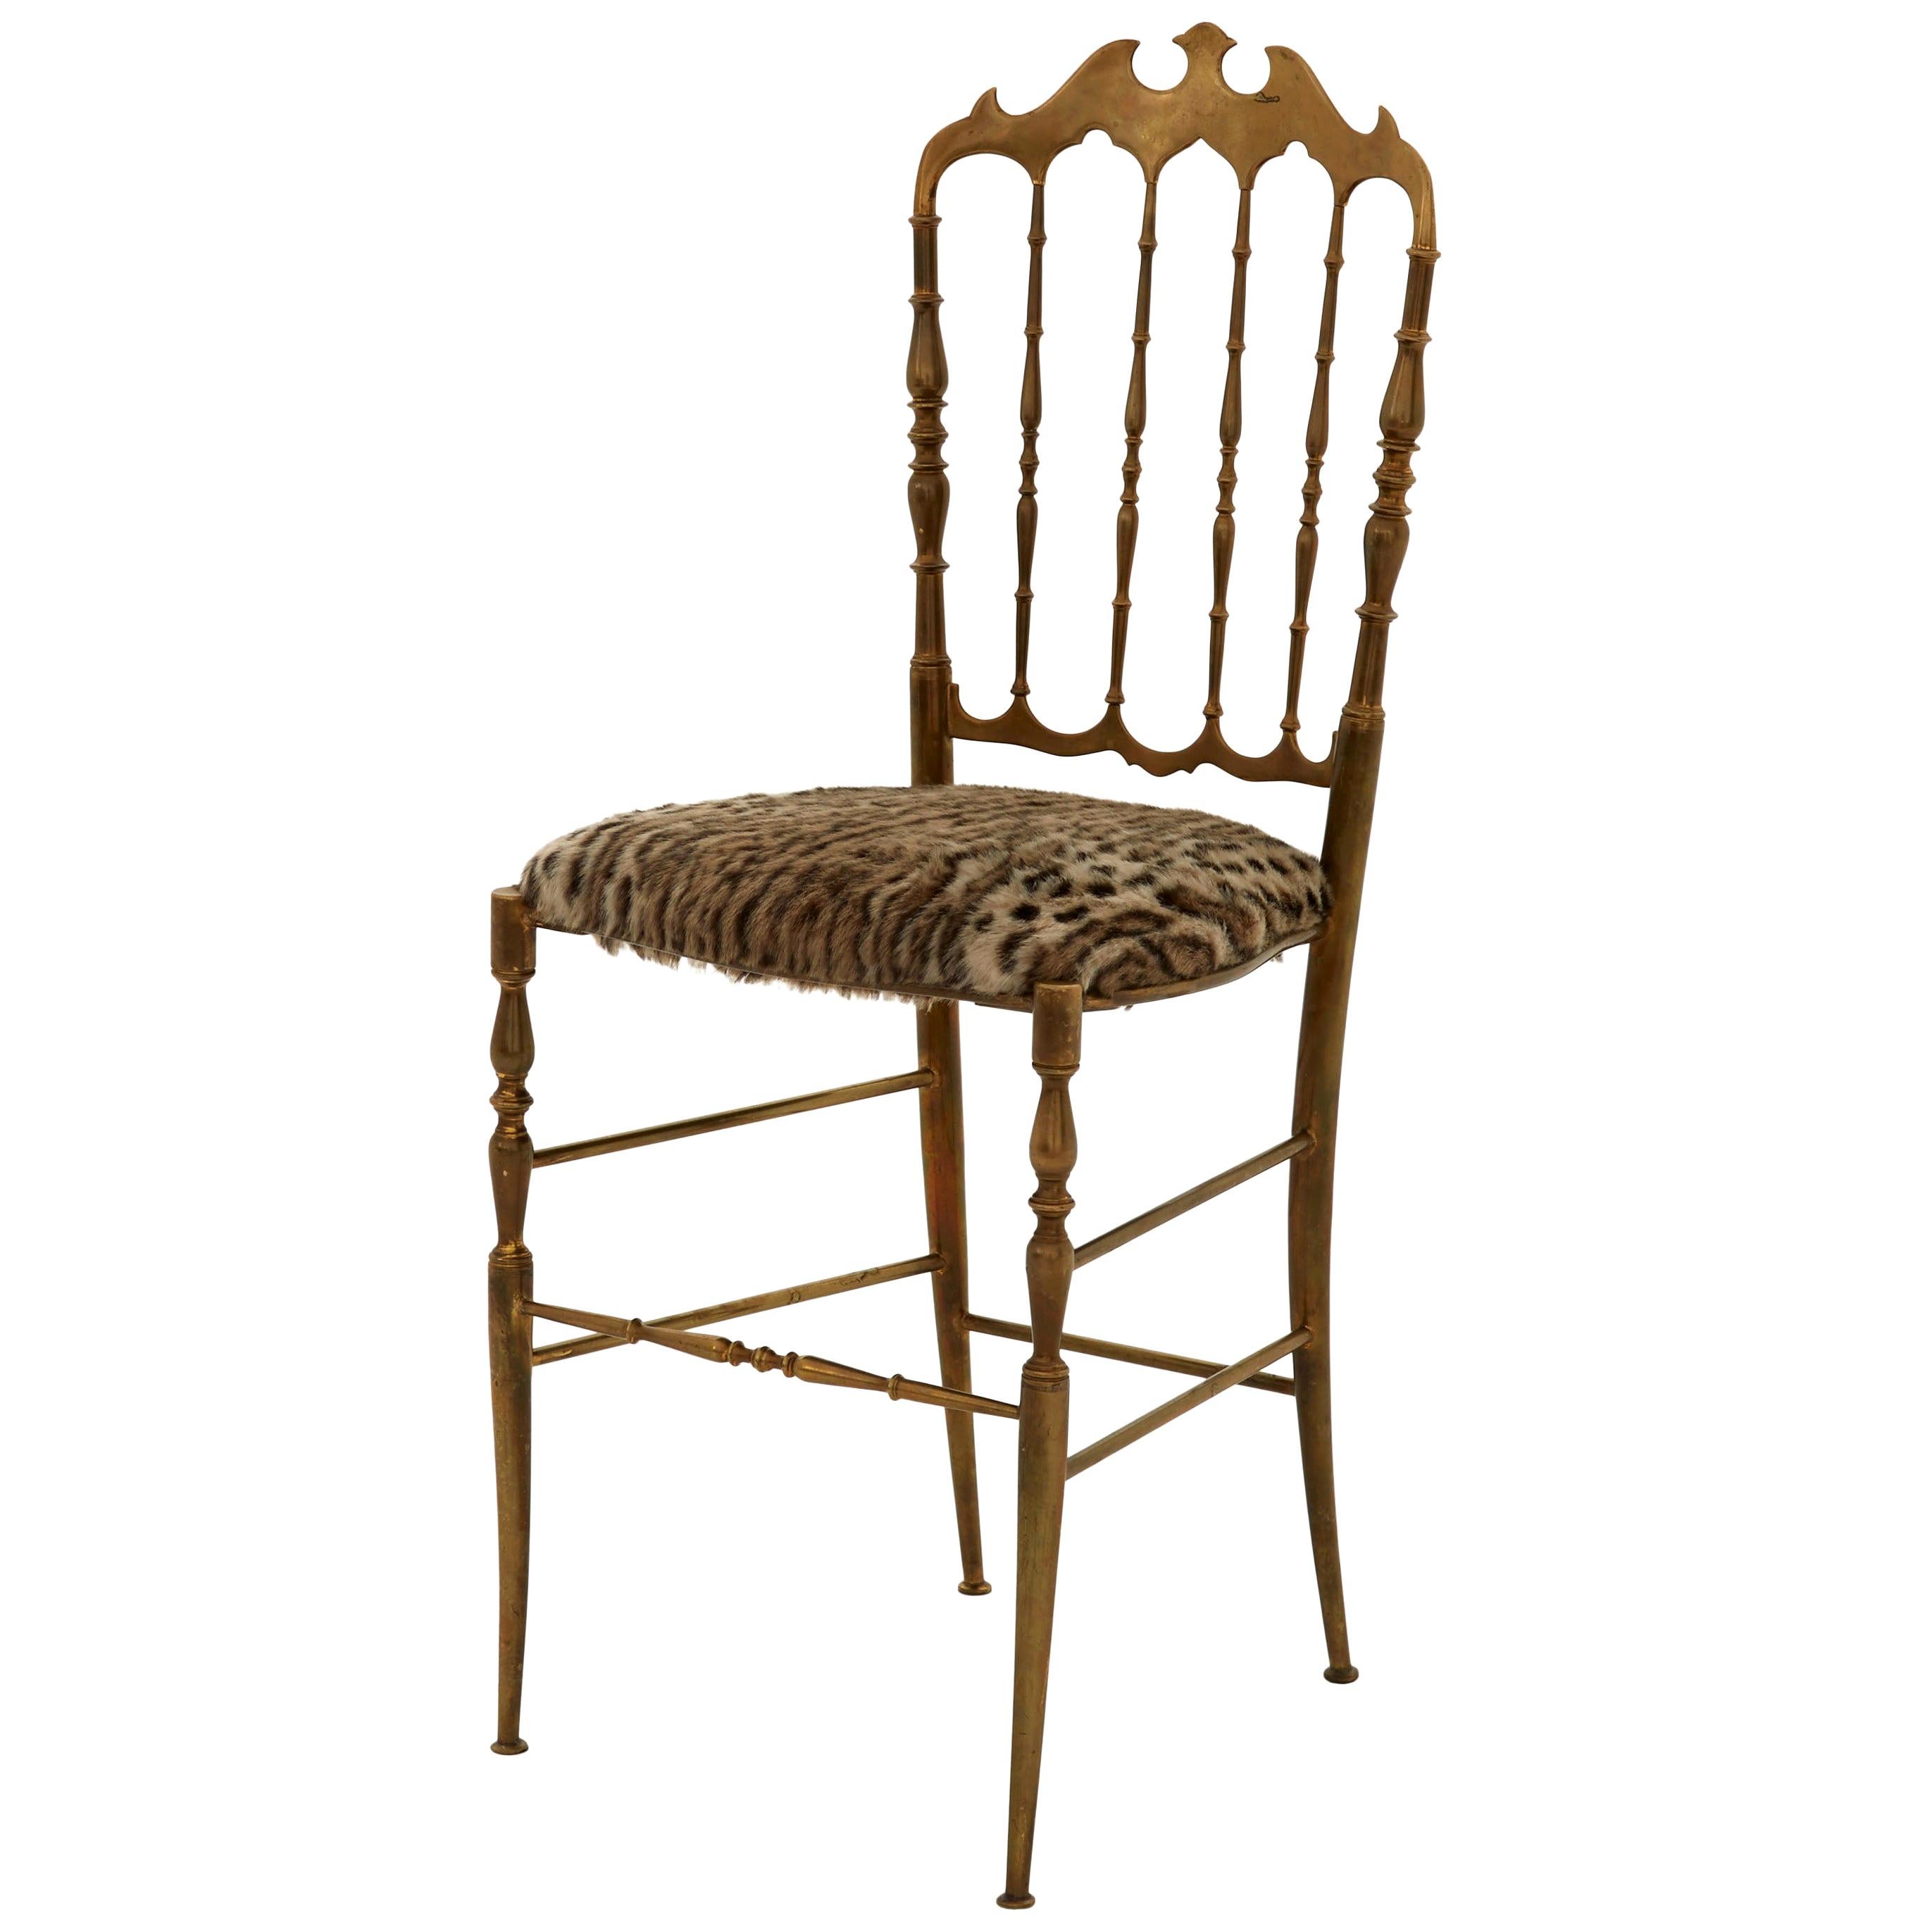 Faux Ocelot Seat Brass Chiavari Chair